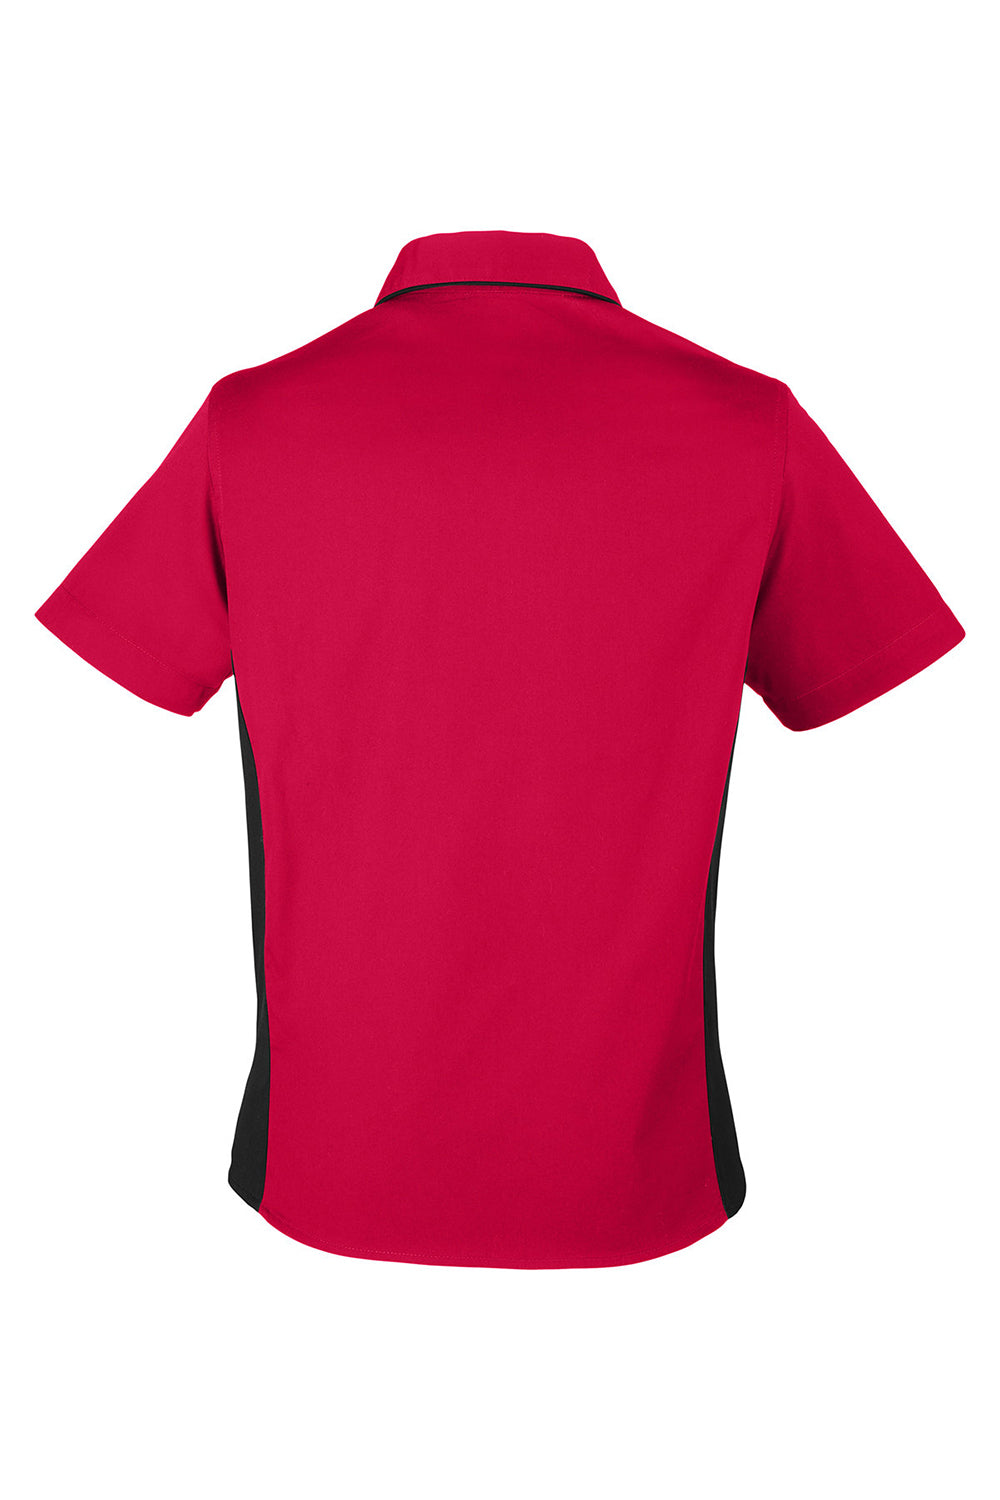 Harriton M586W Womens Flash Colorblock Short Sleeve Button Down Shirt Red/Black Flat Back